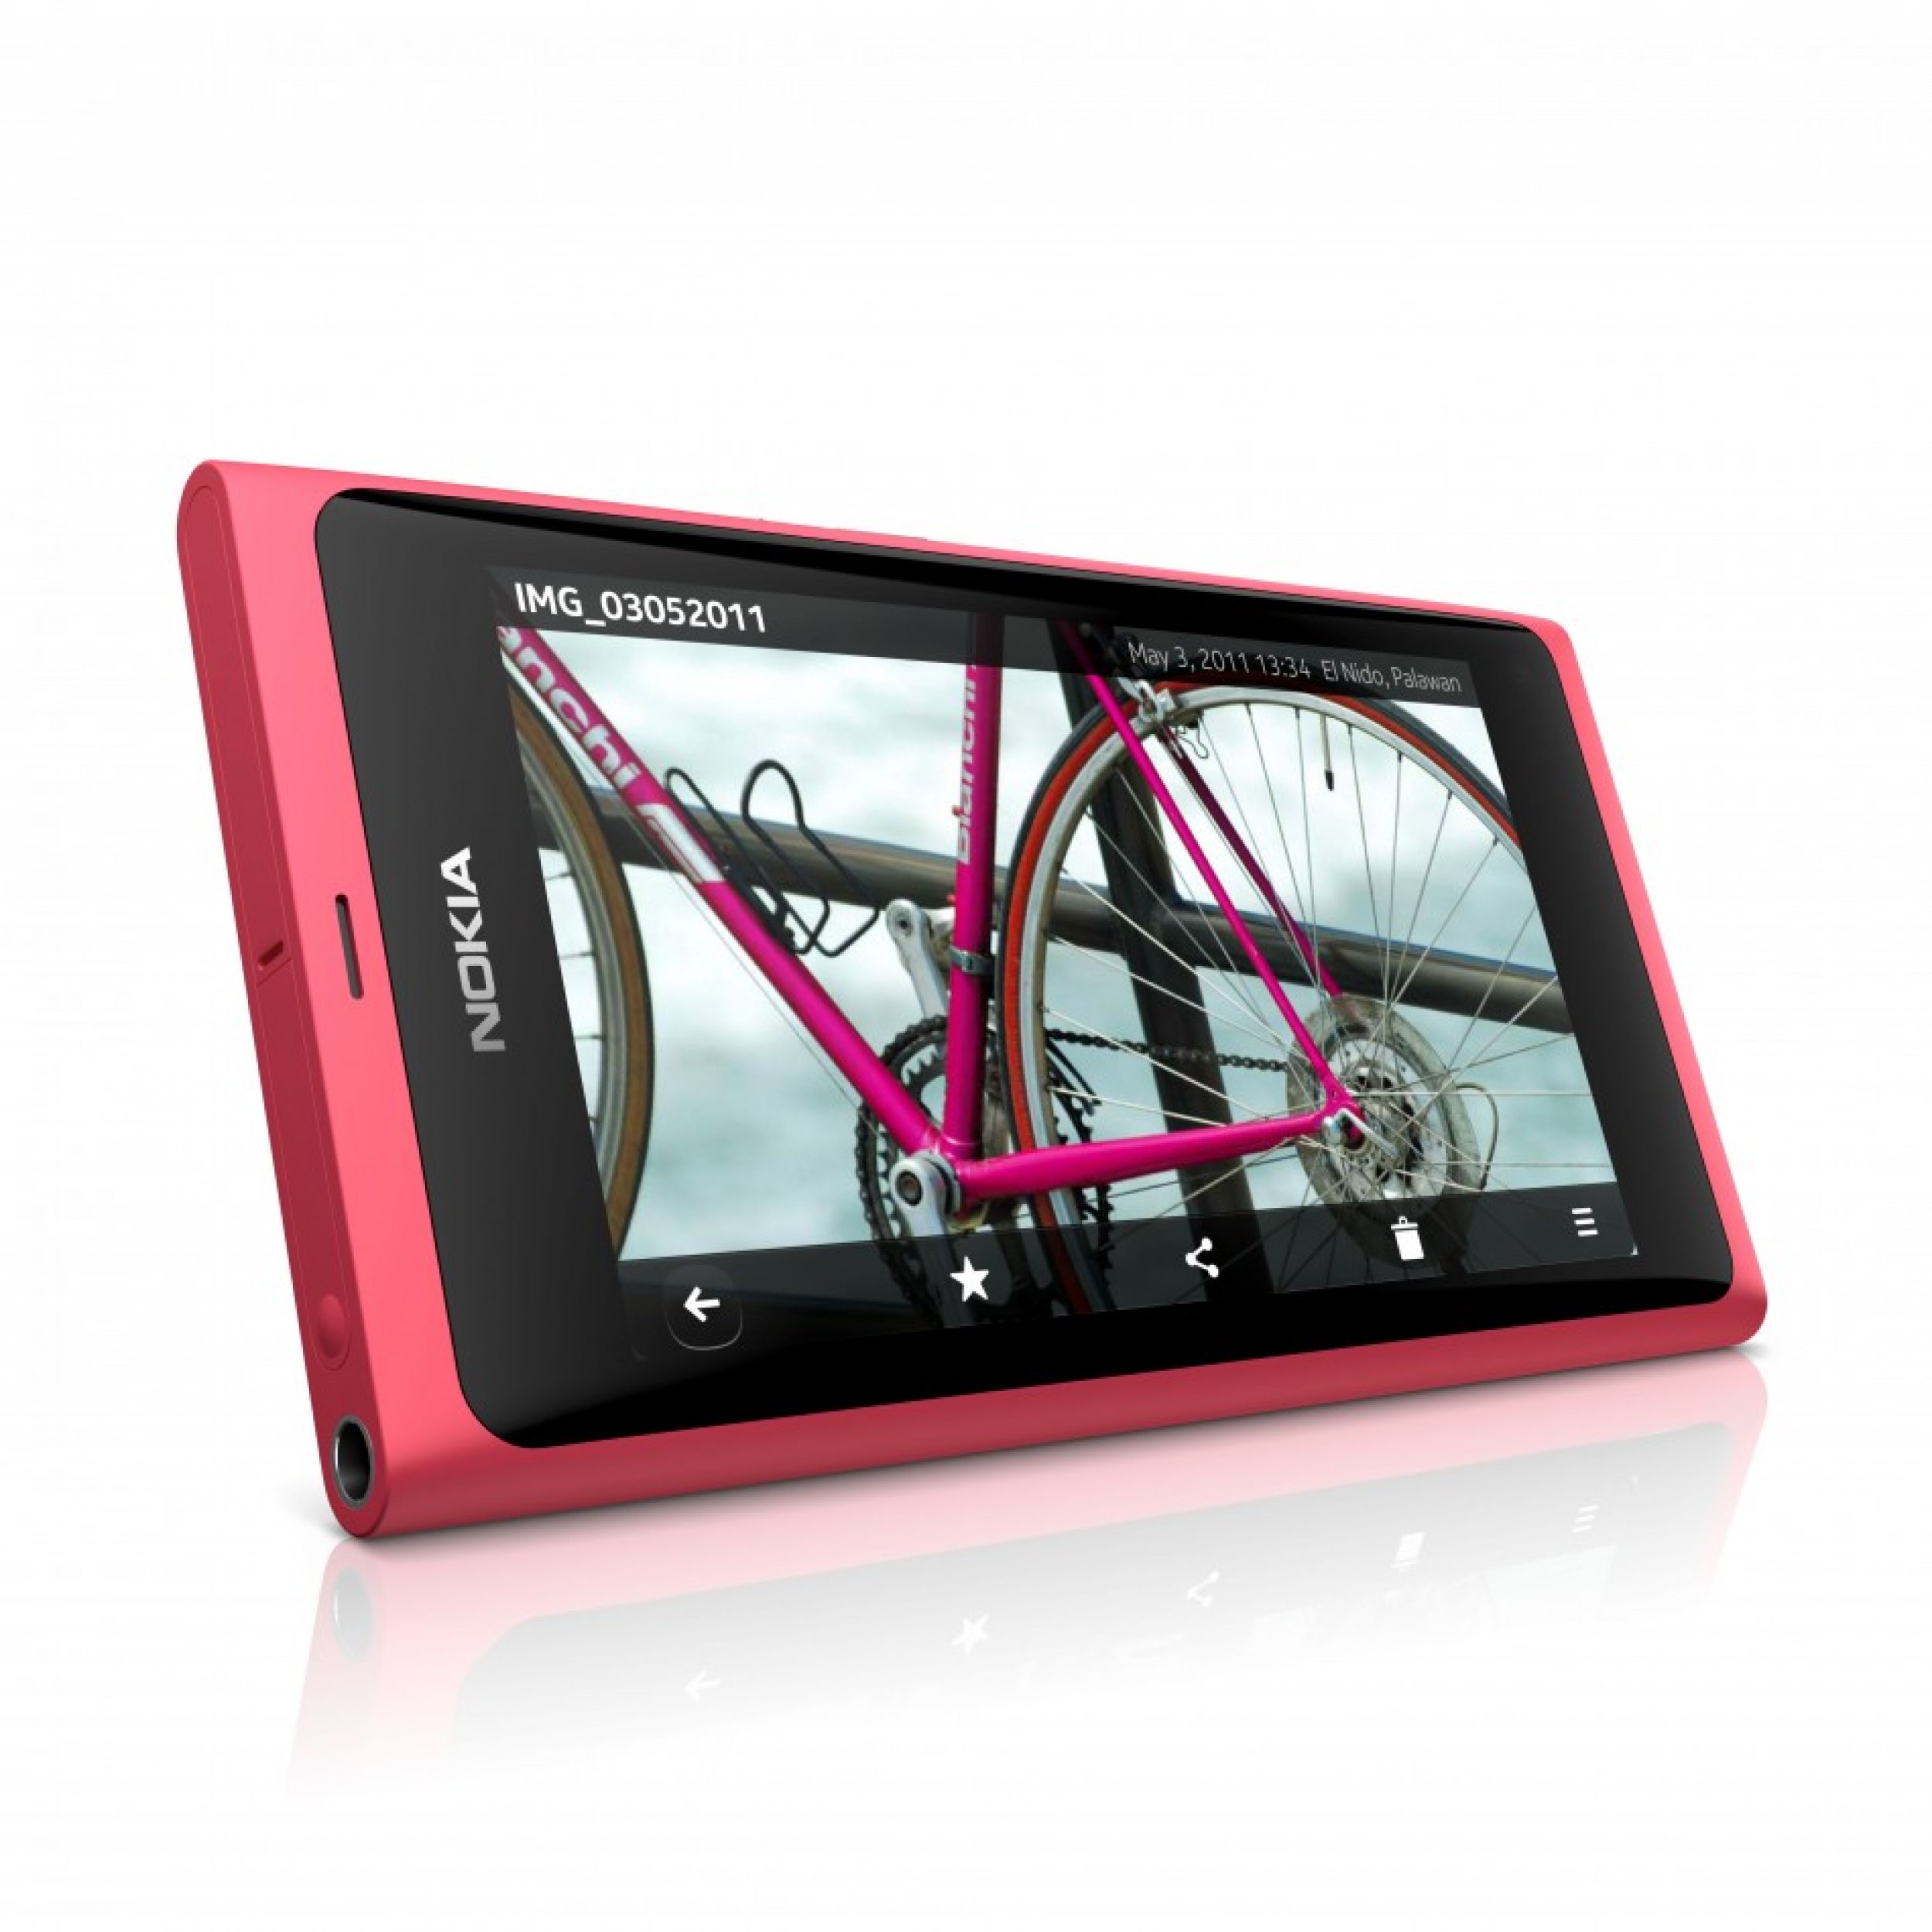 The Nokia N9